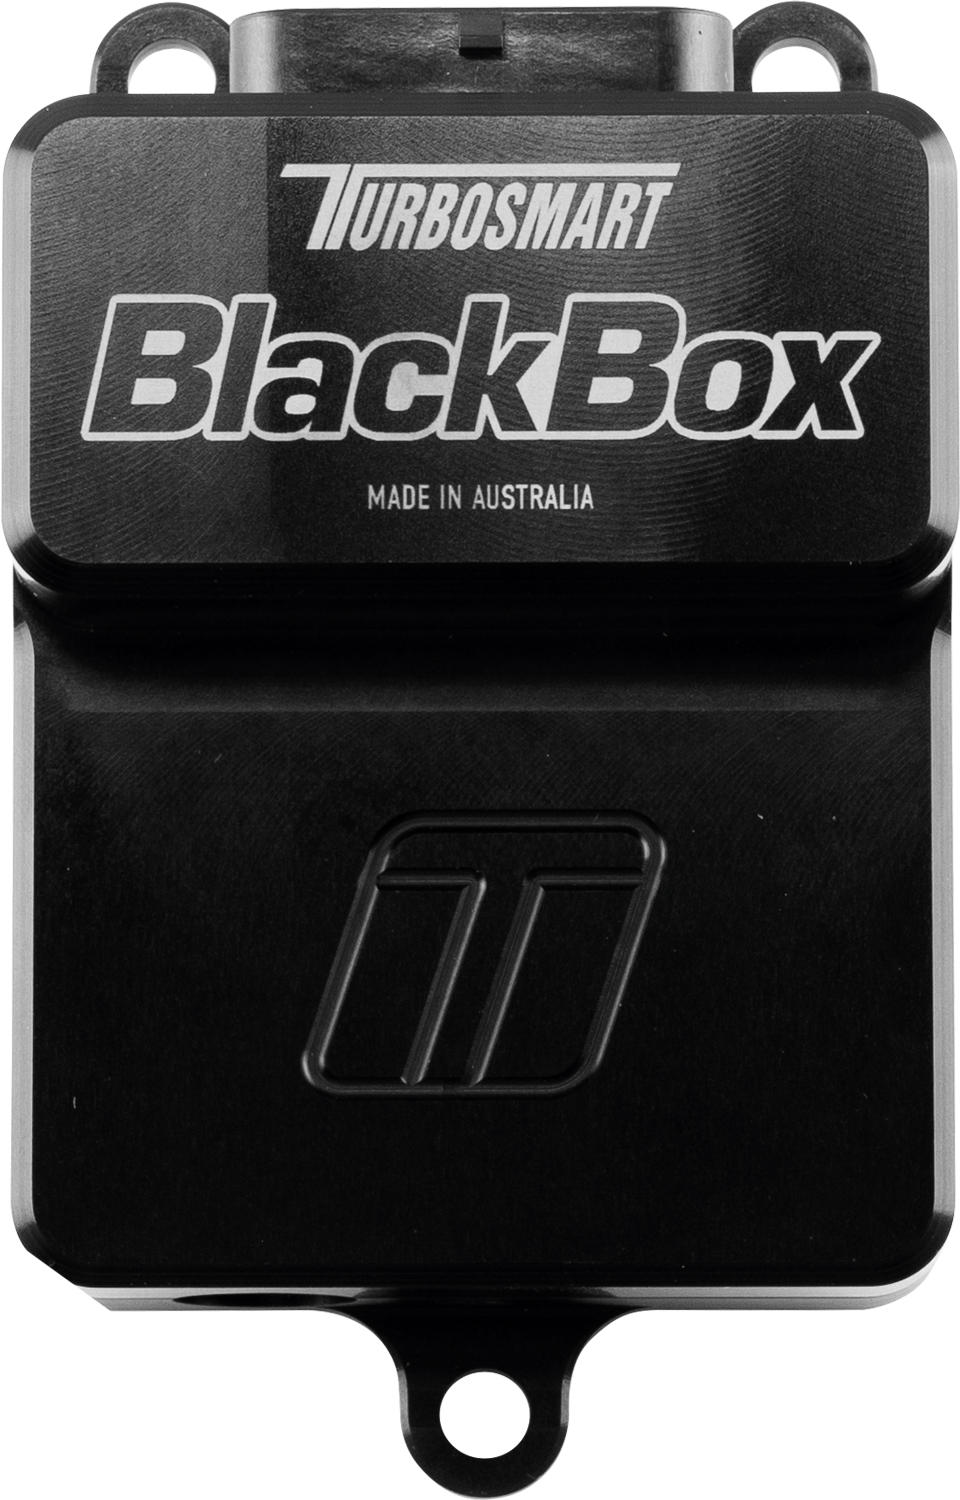 Turbosmart Black Box